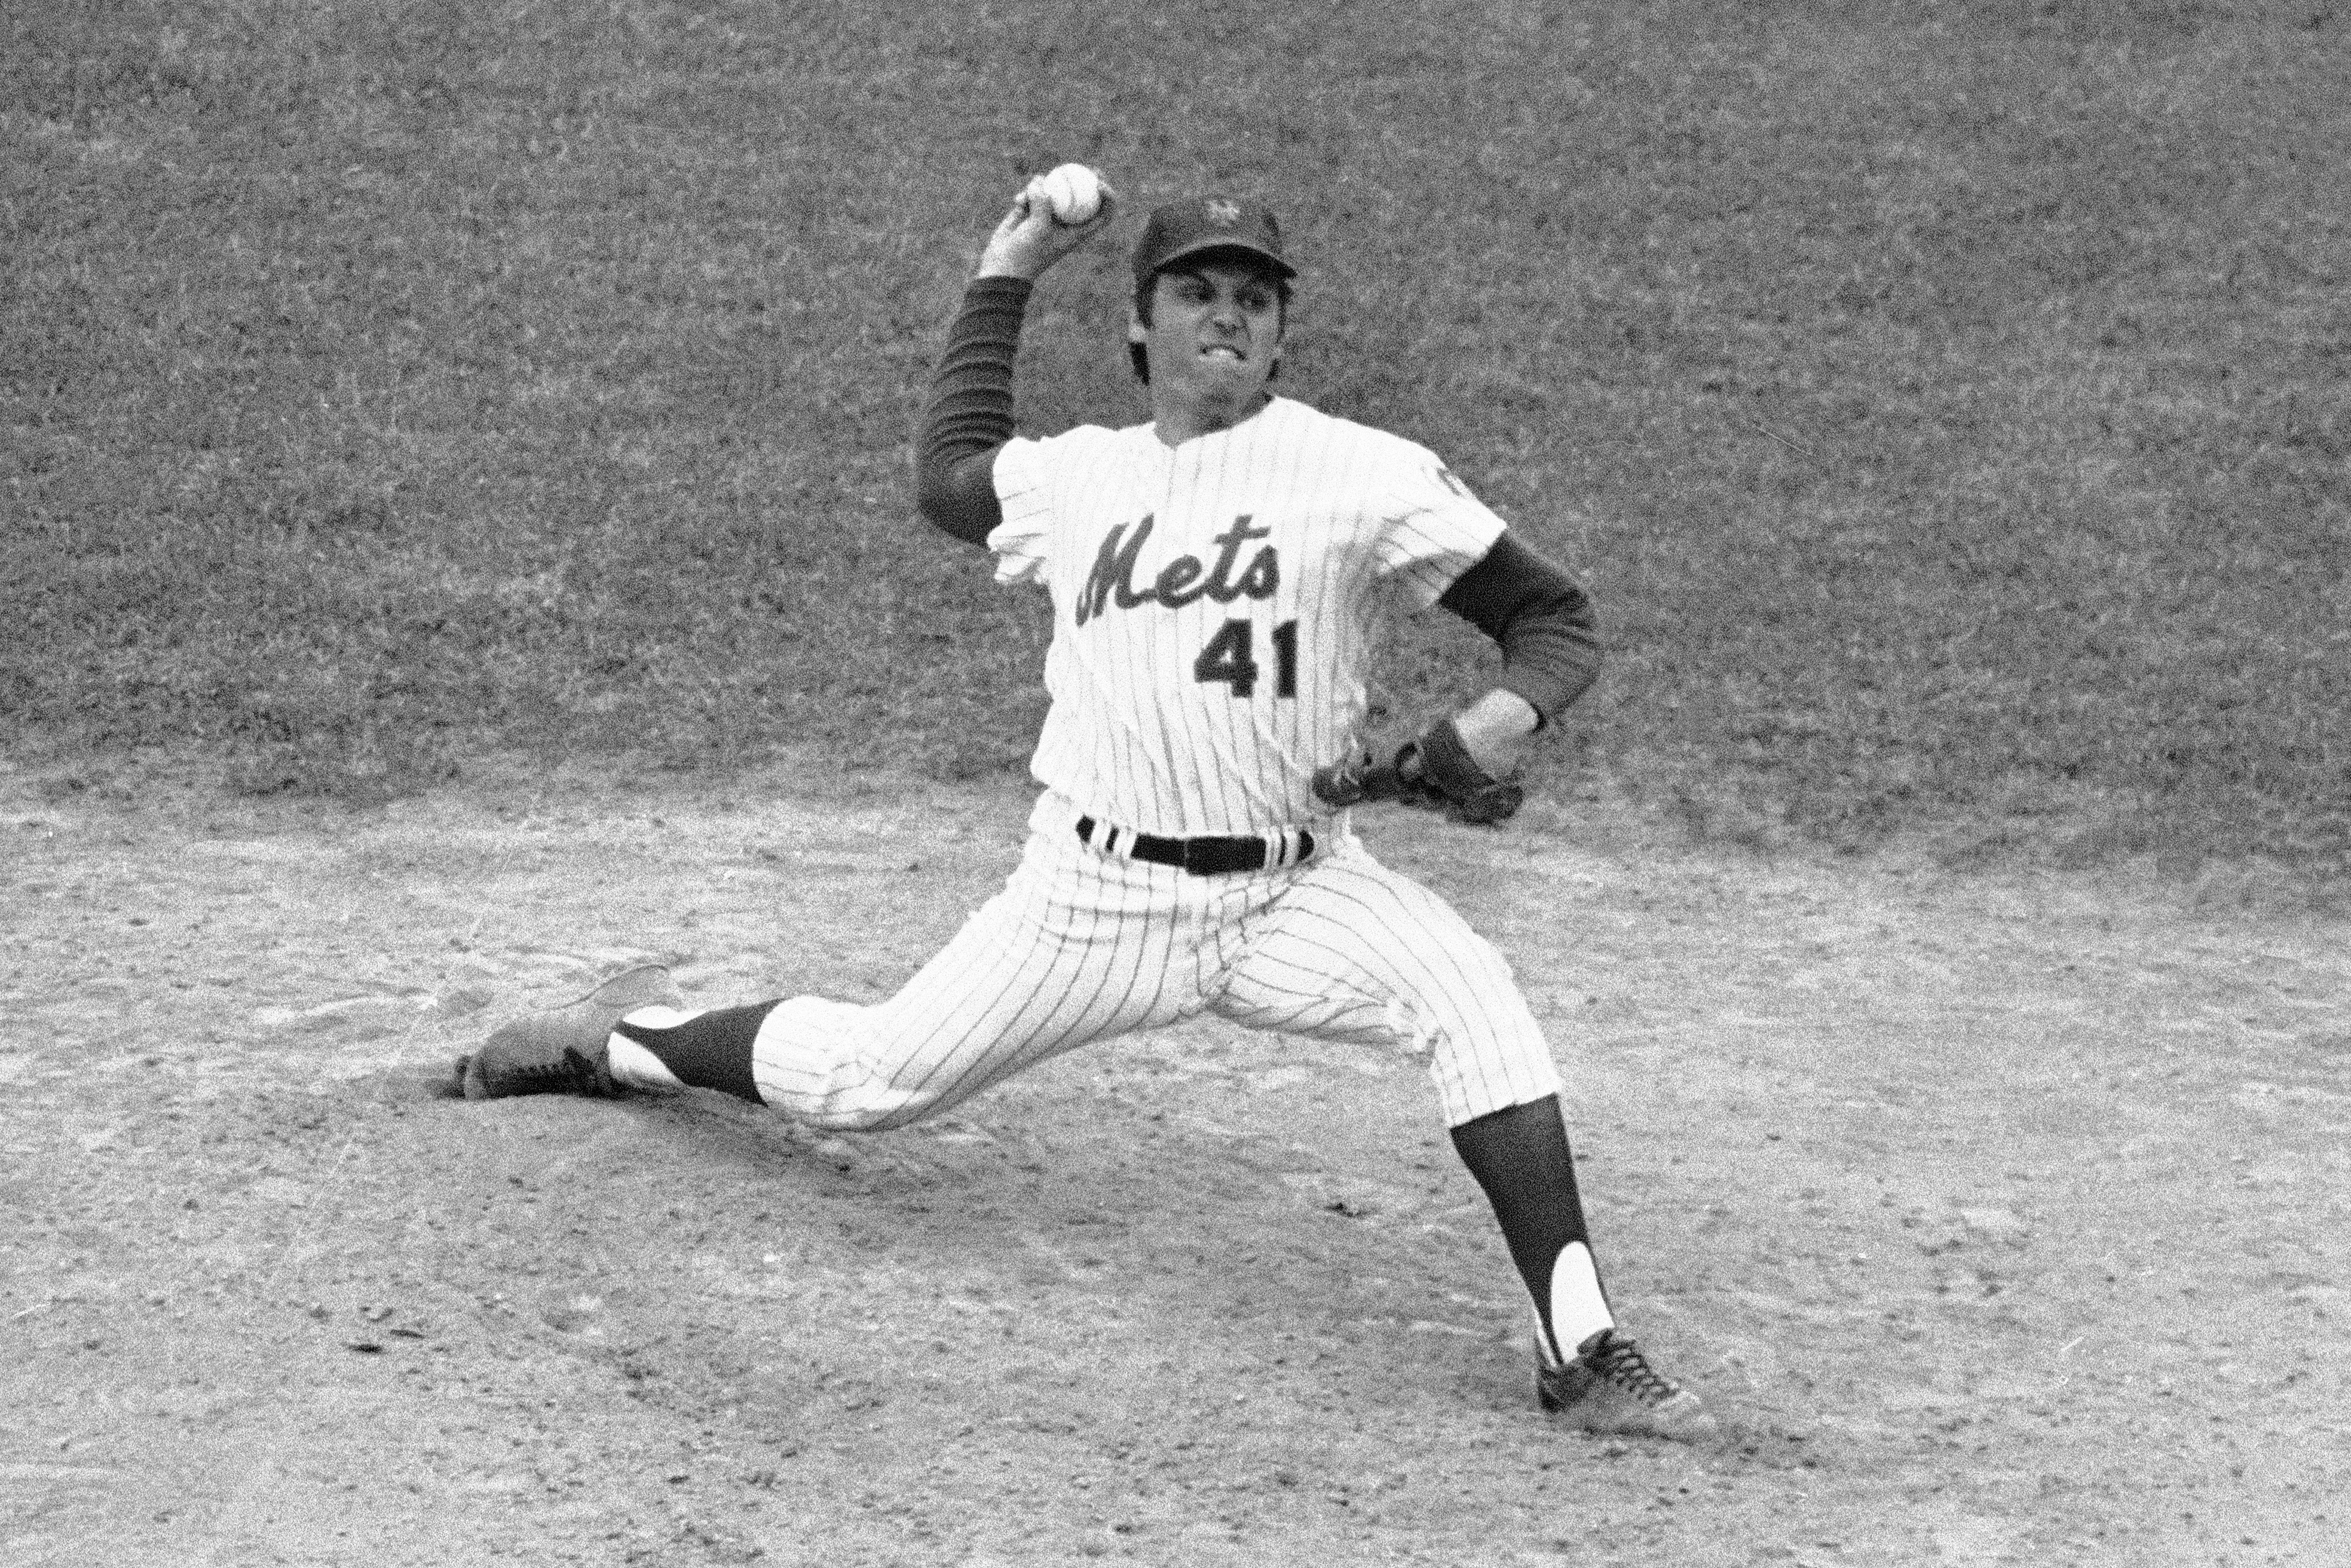 1976 Tom Seaver Game Worn New York Mets Jersey. Baseball